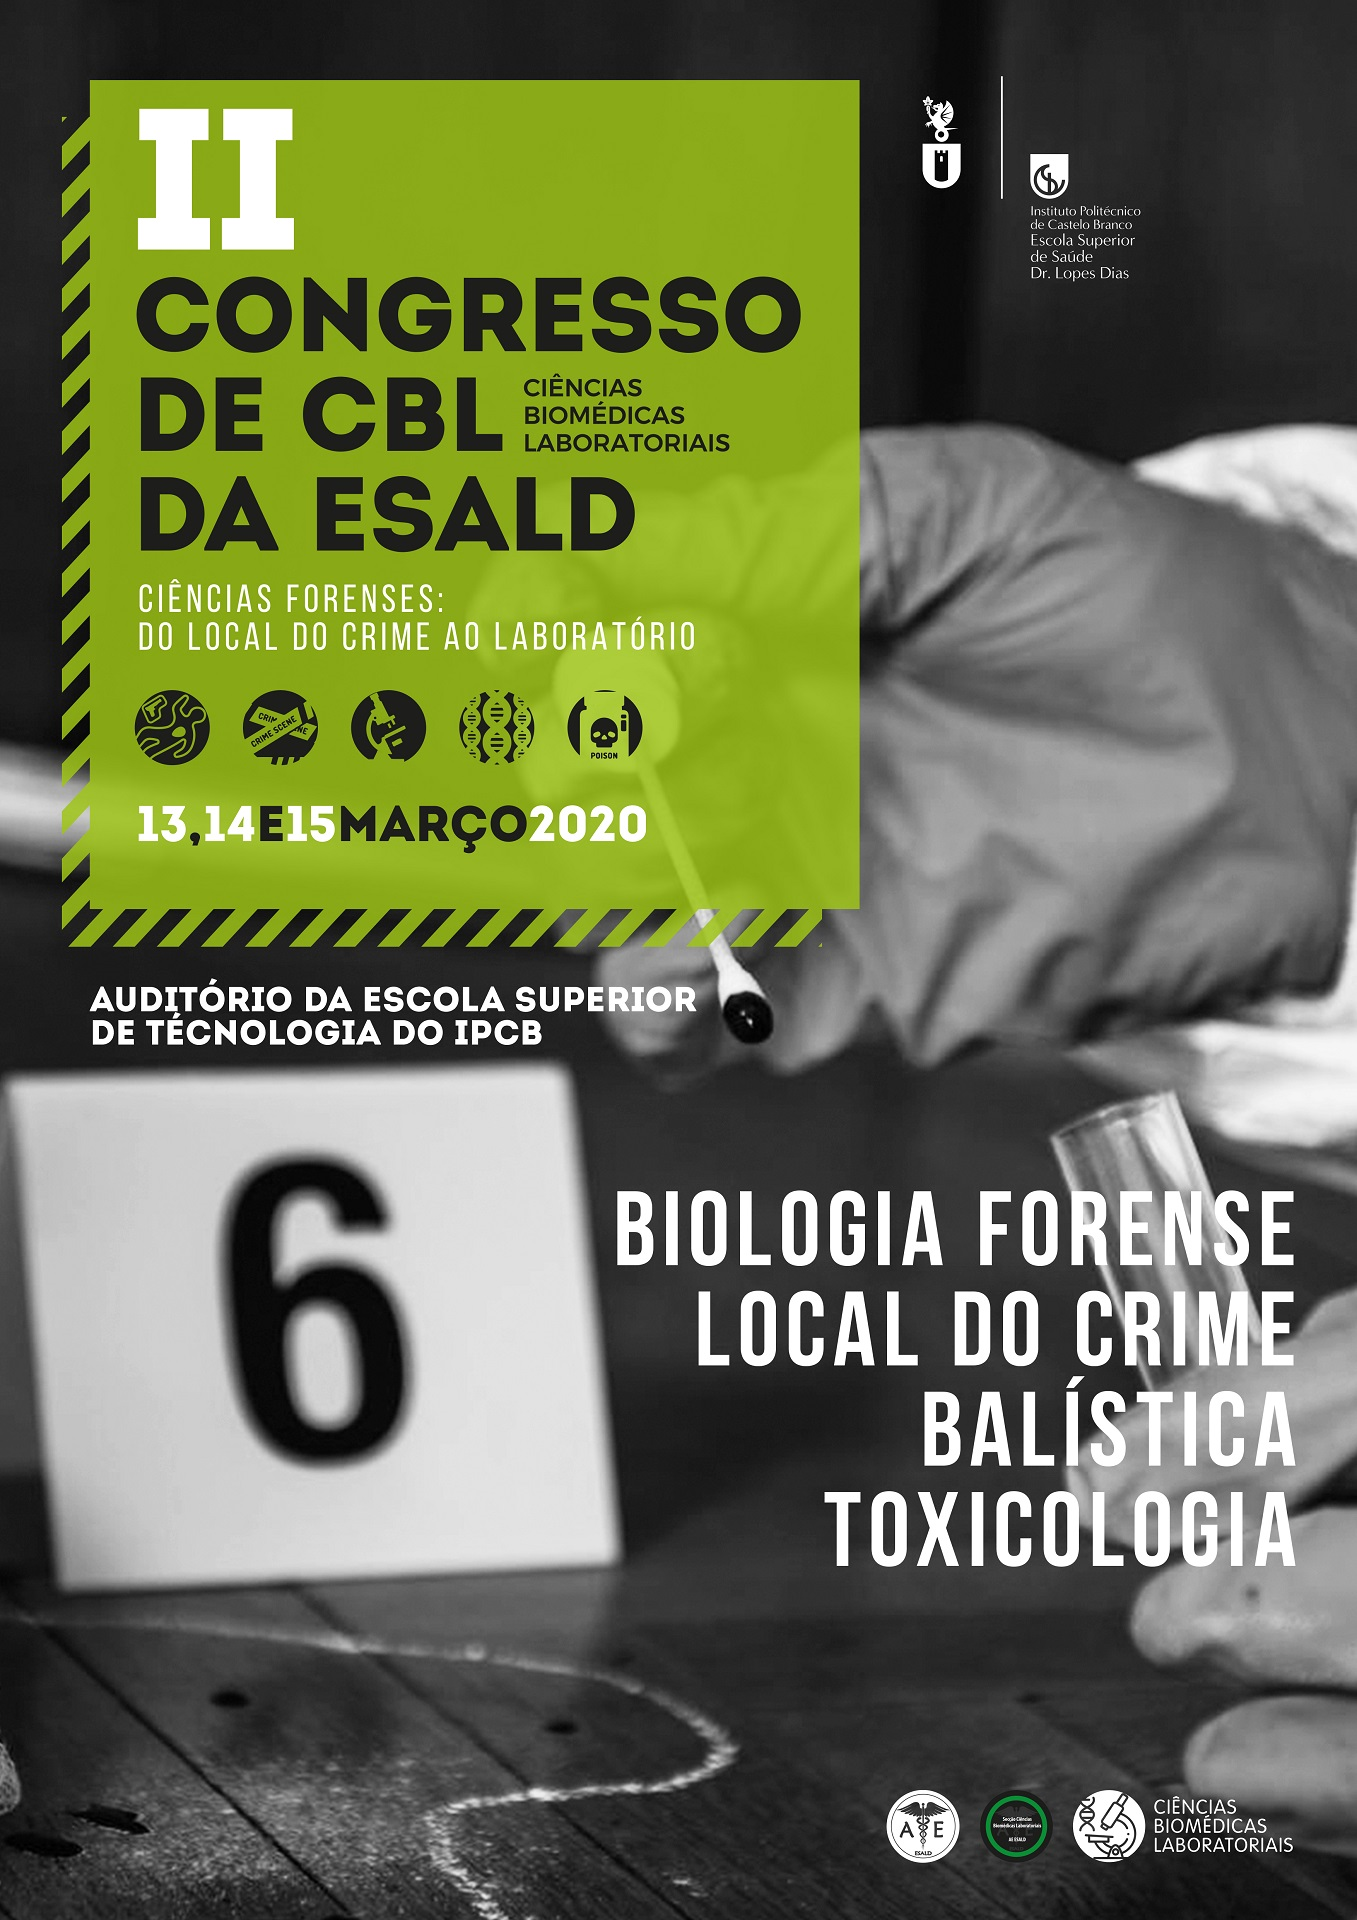 Toxicologia - Ciência contra o Crime